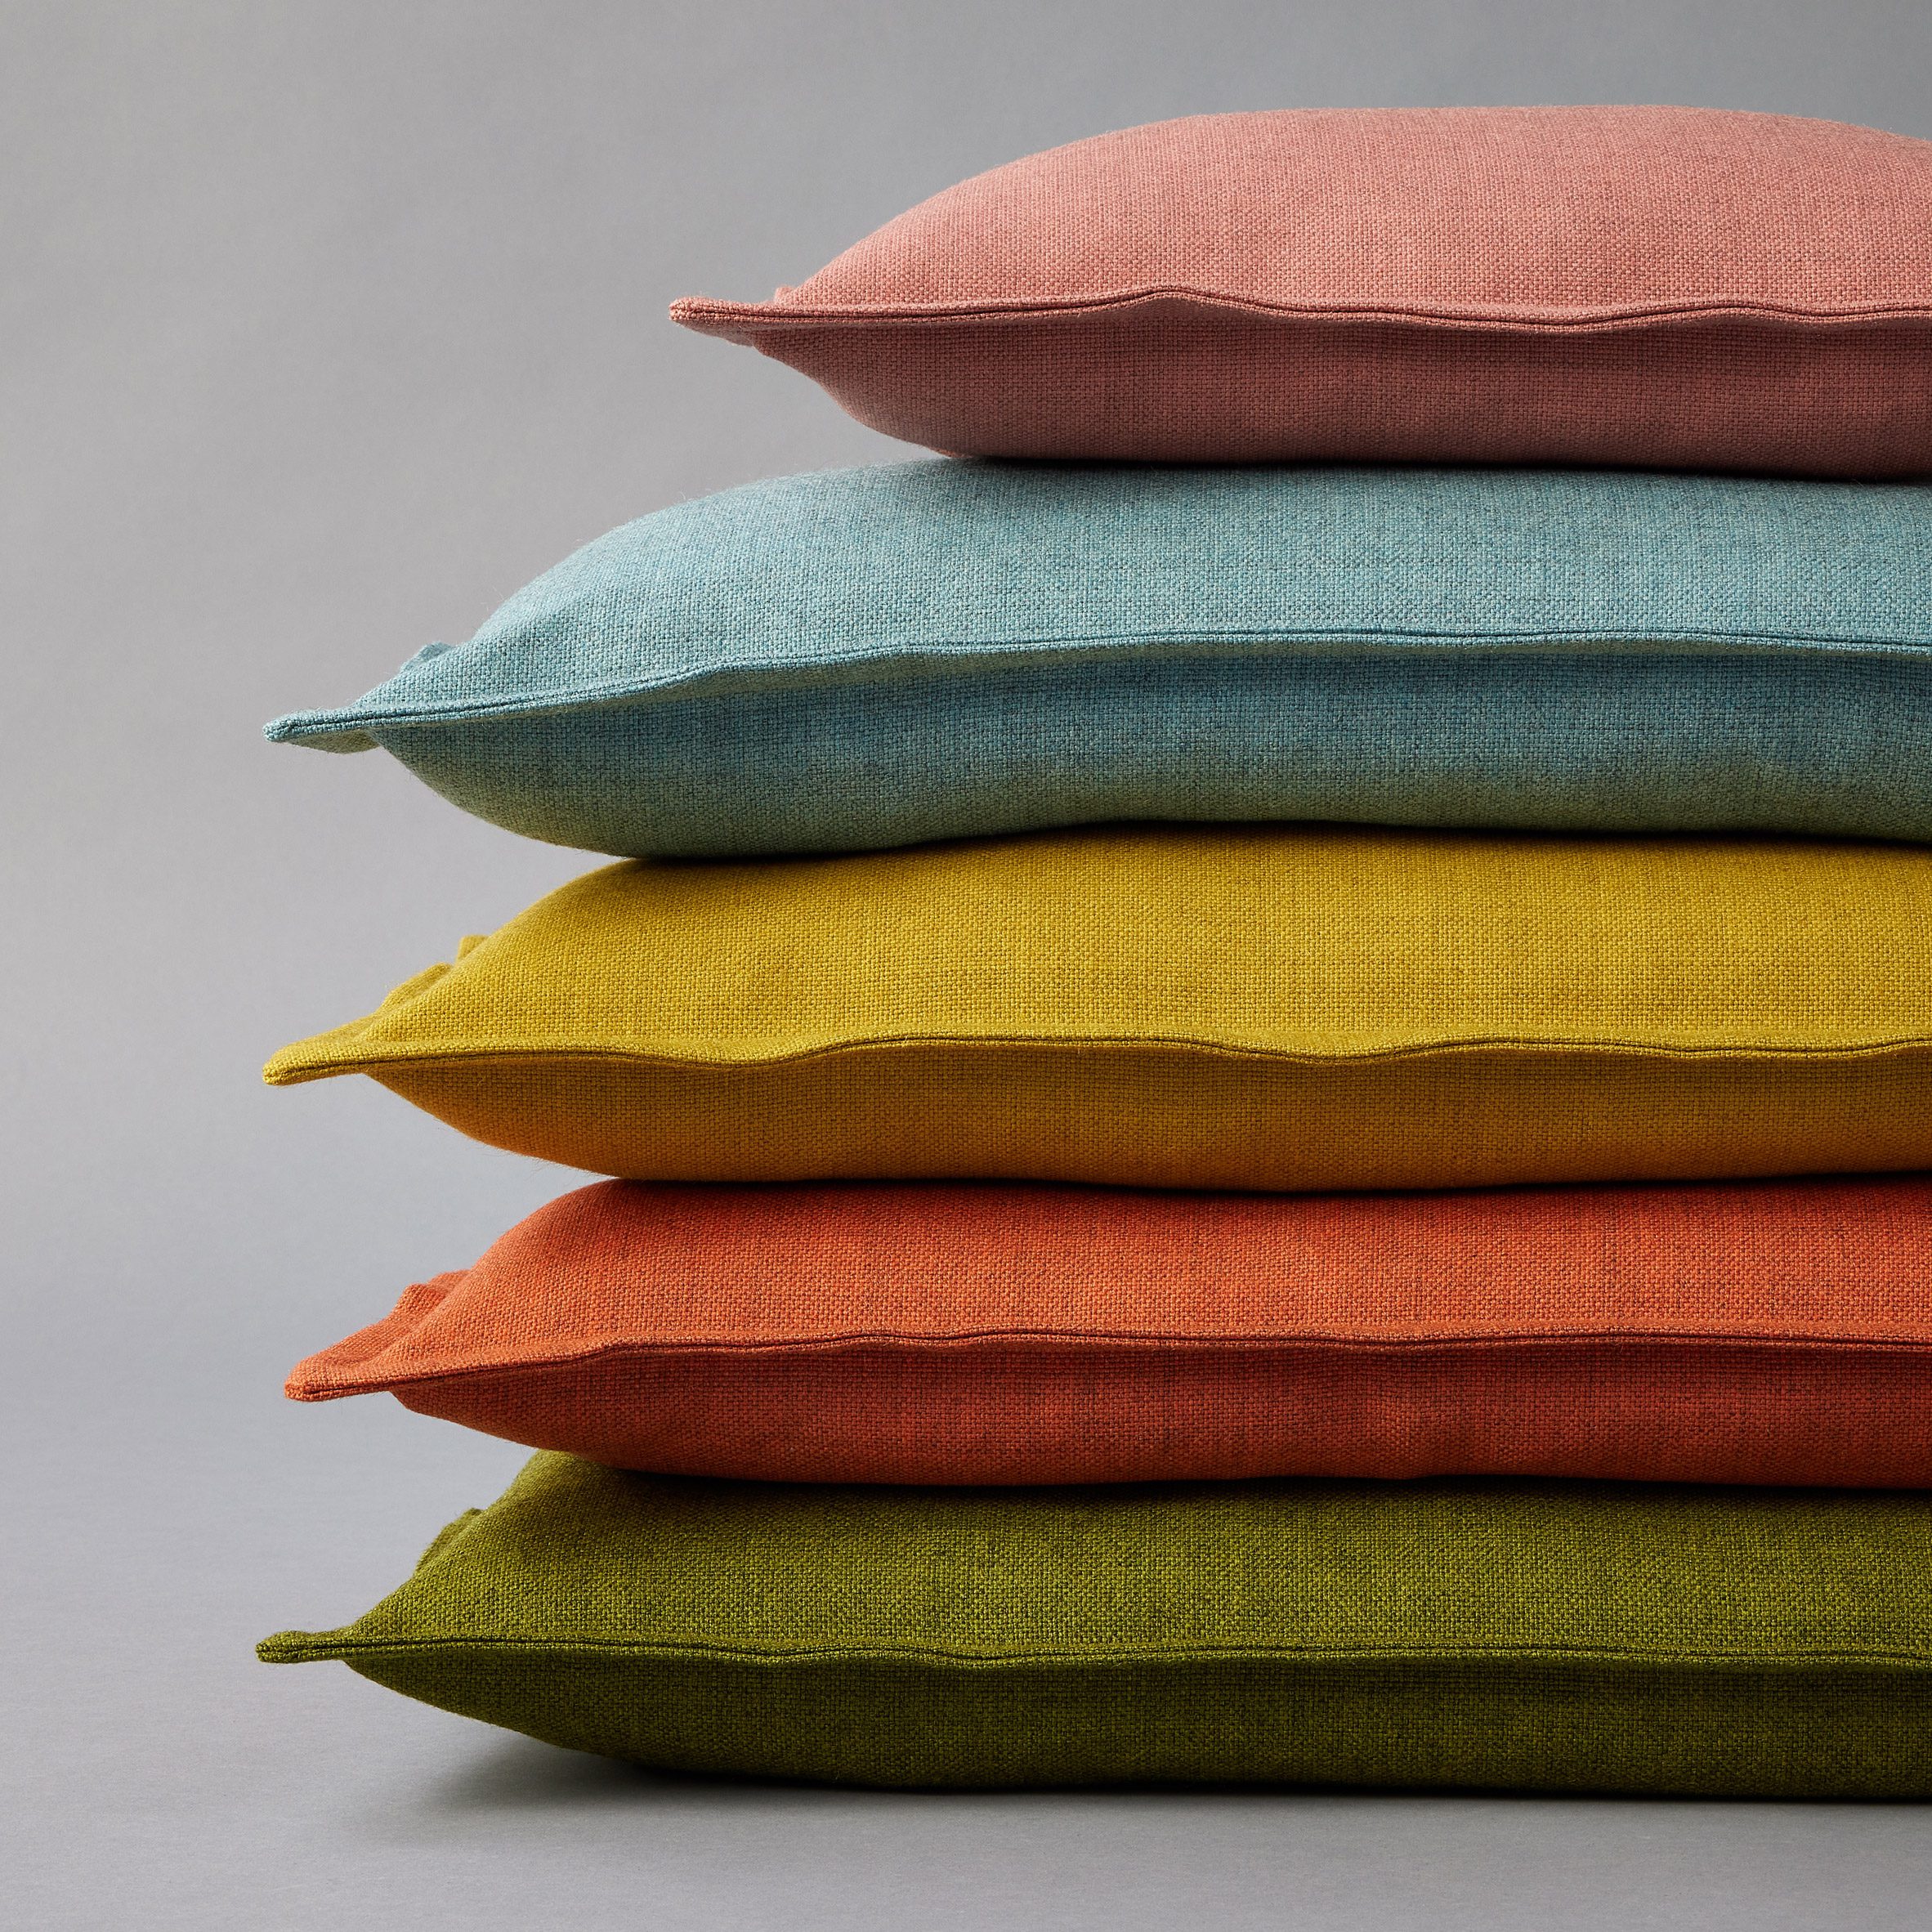 Coloured cushions